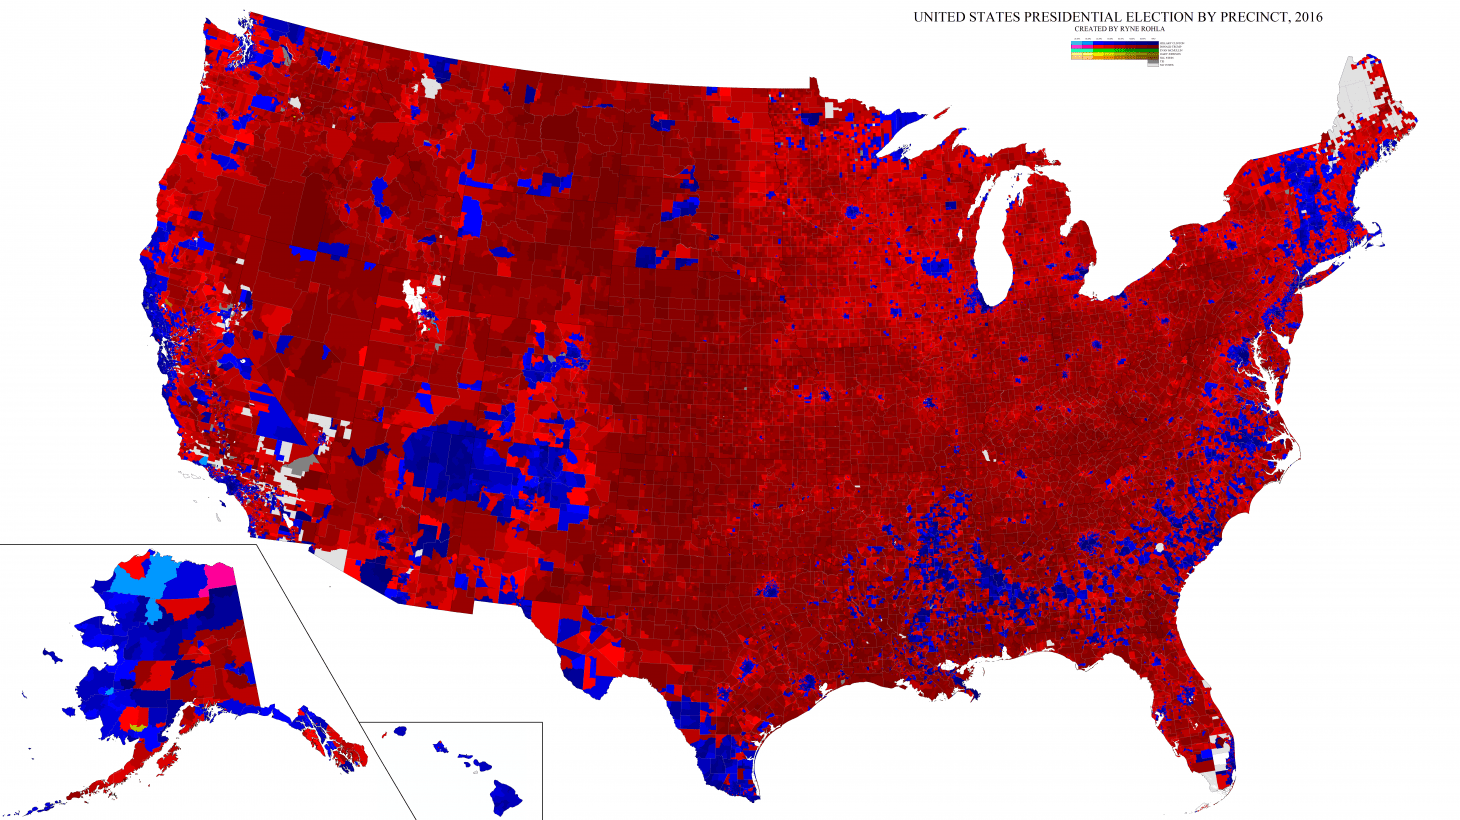 2016-US-President-by-Precinct-1460x820-min.png